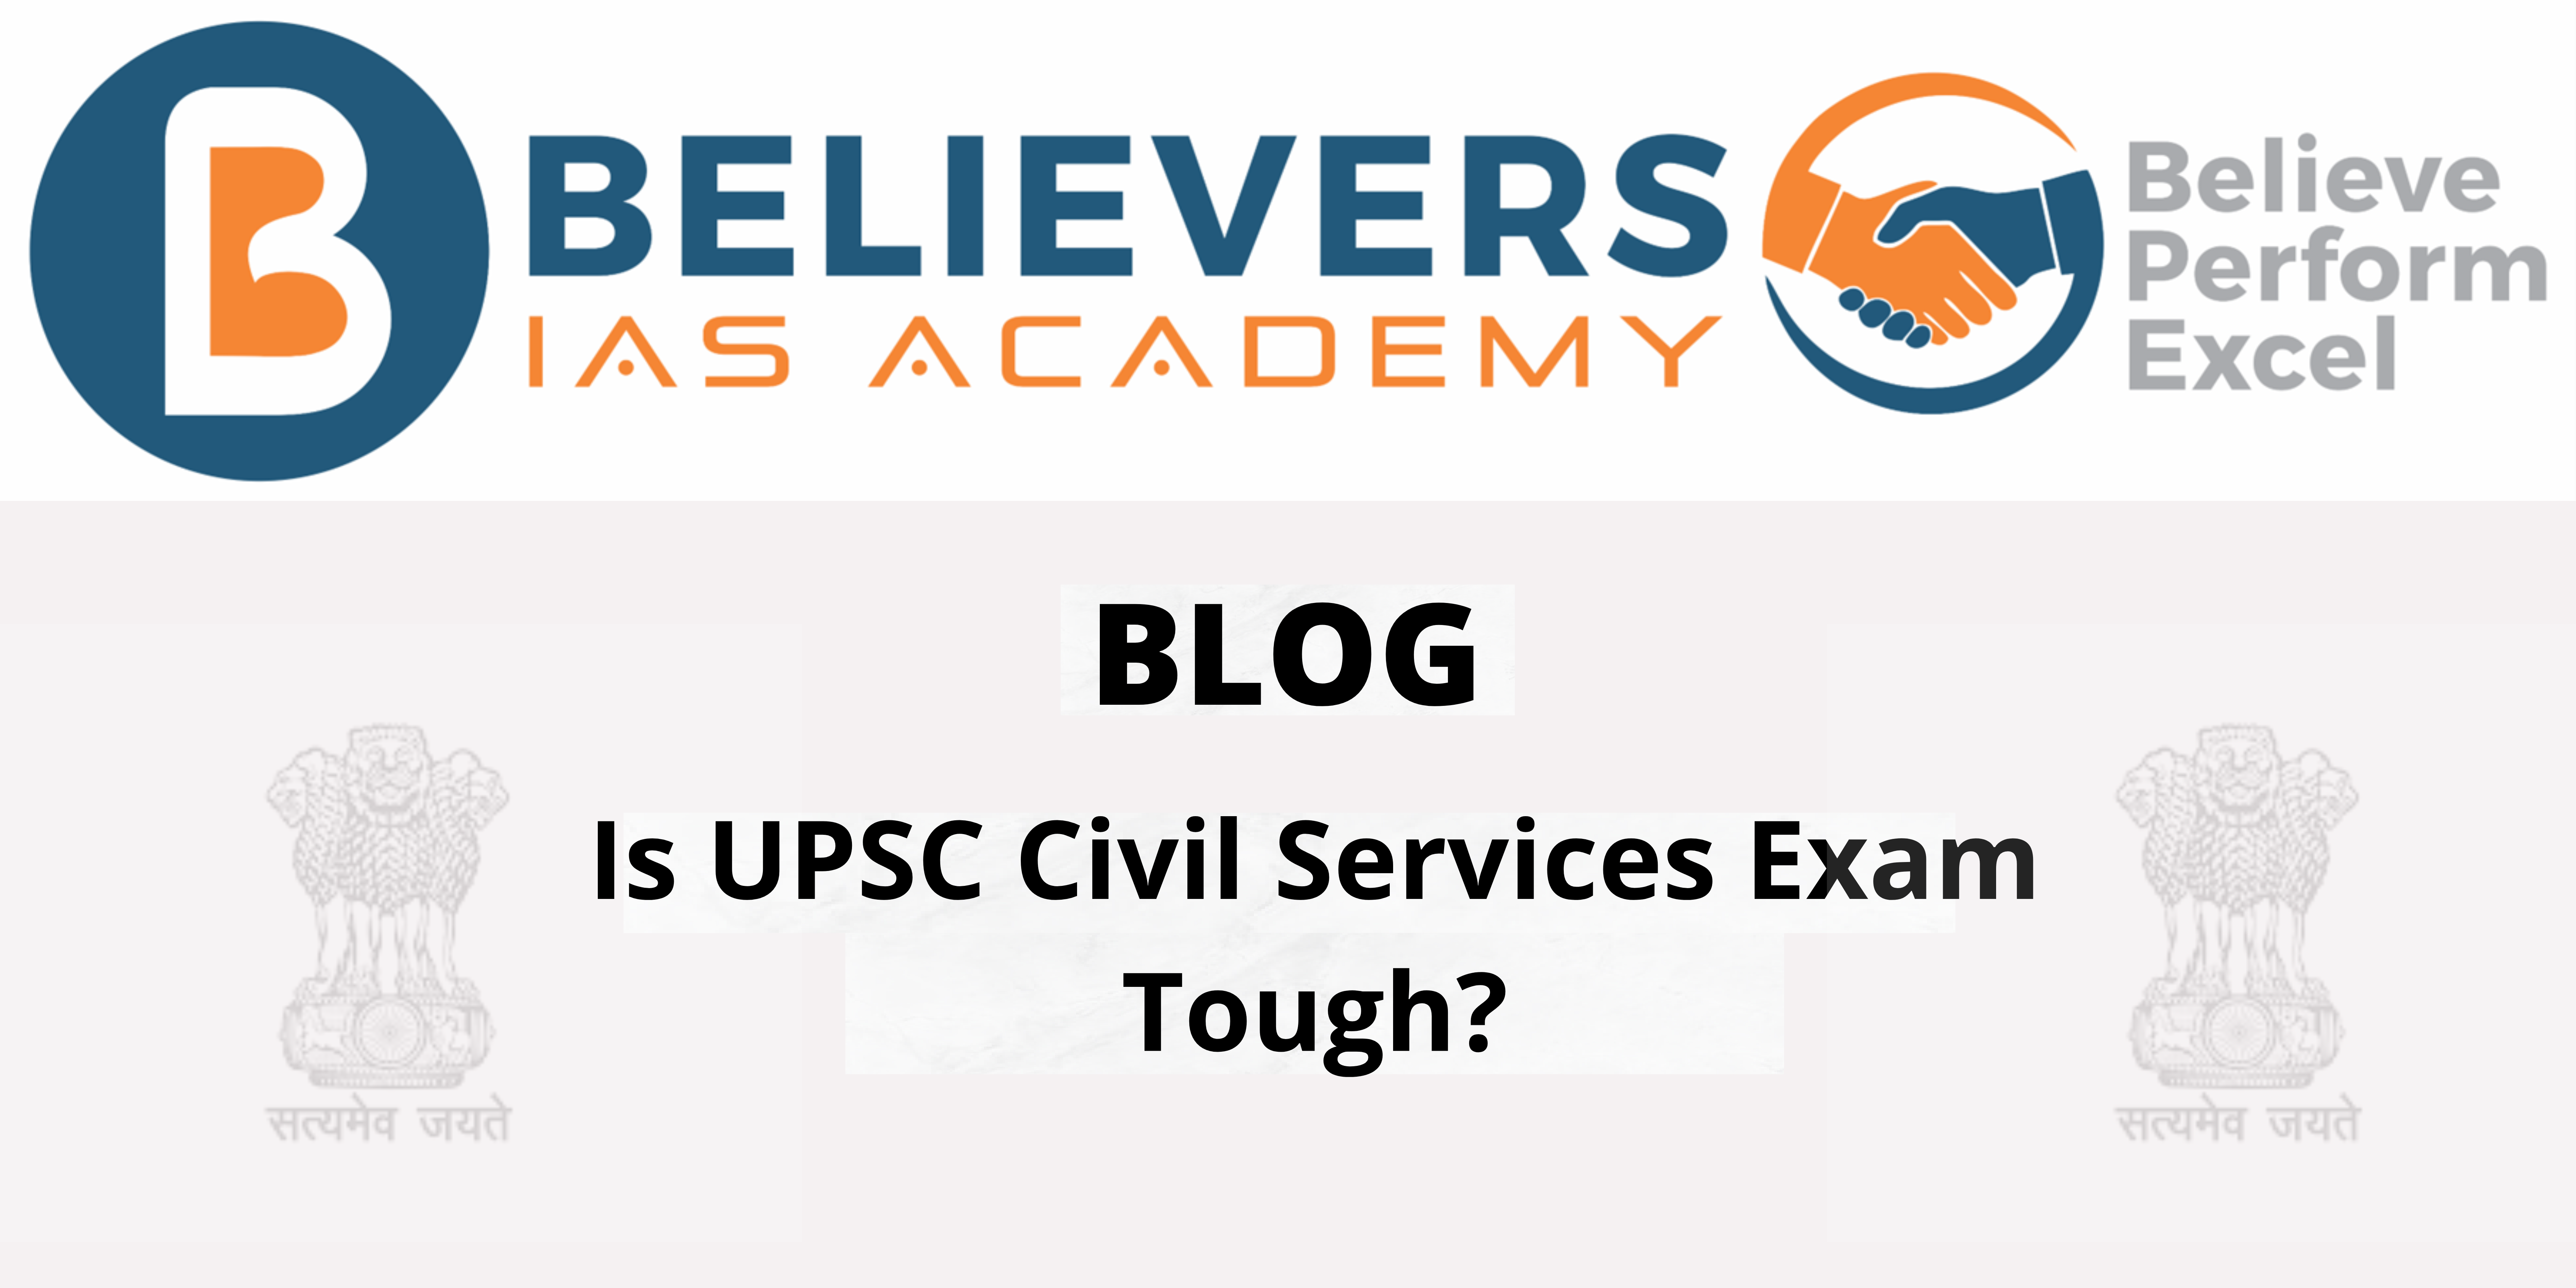 Is UPSC Civil Services Exam Tough?